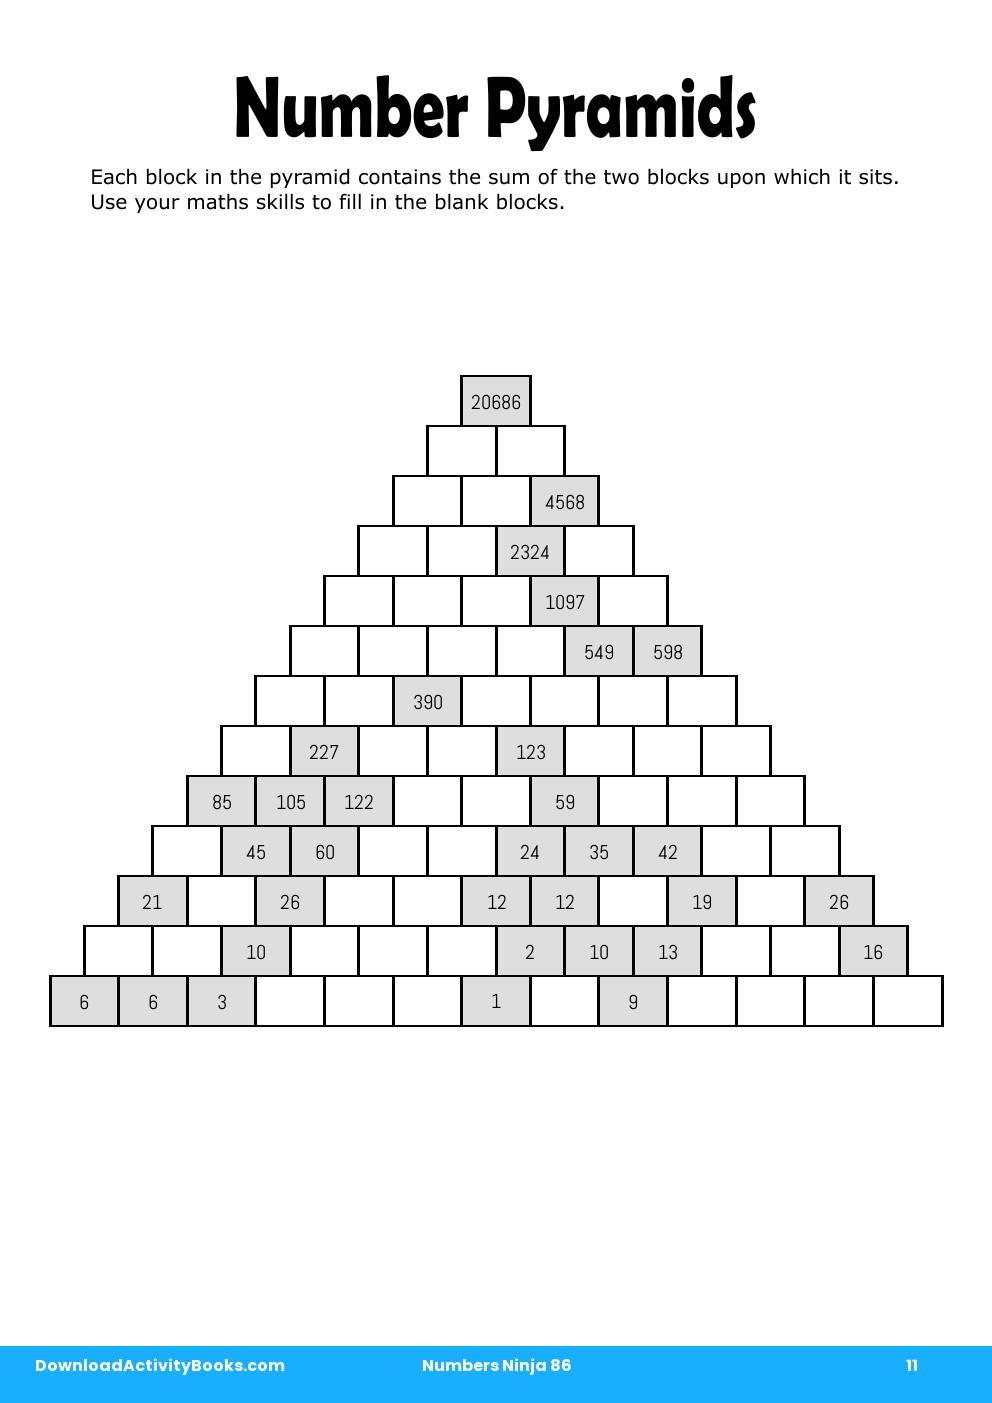 Number Pyramids in Numbers Ninja 86